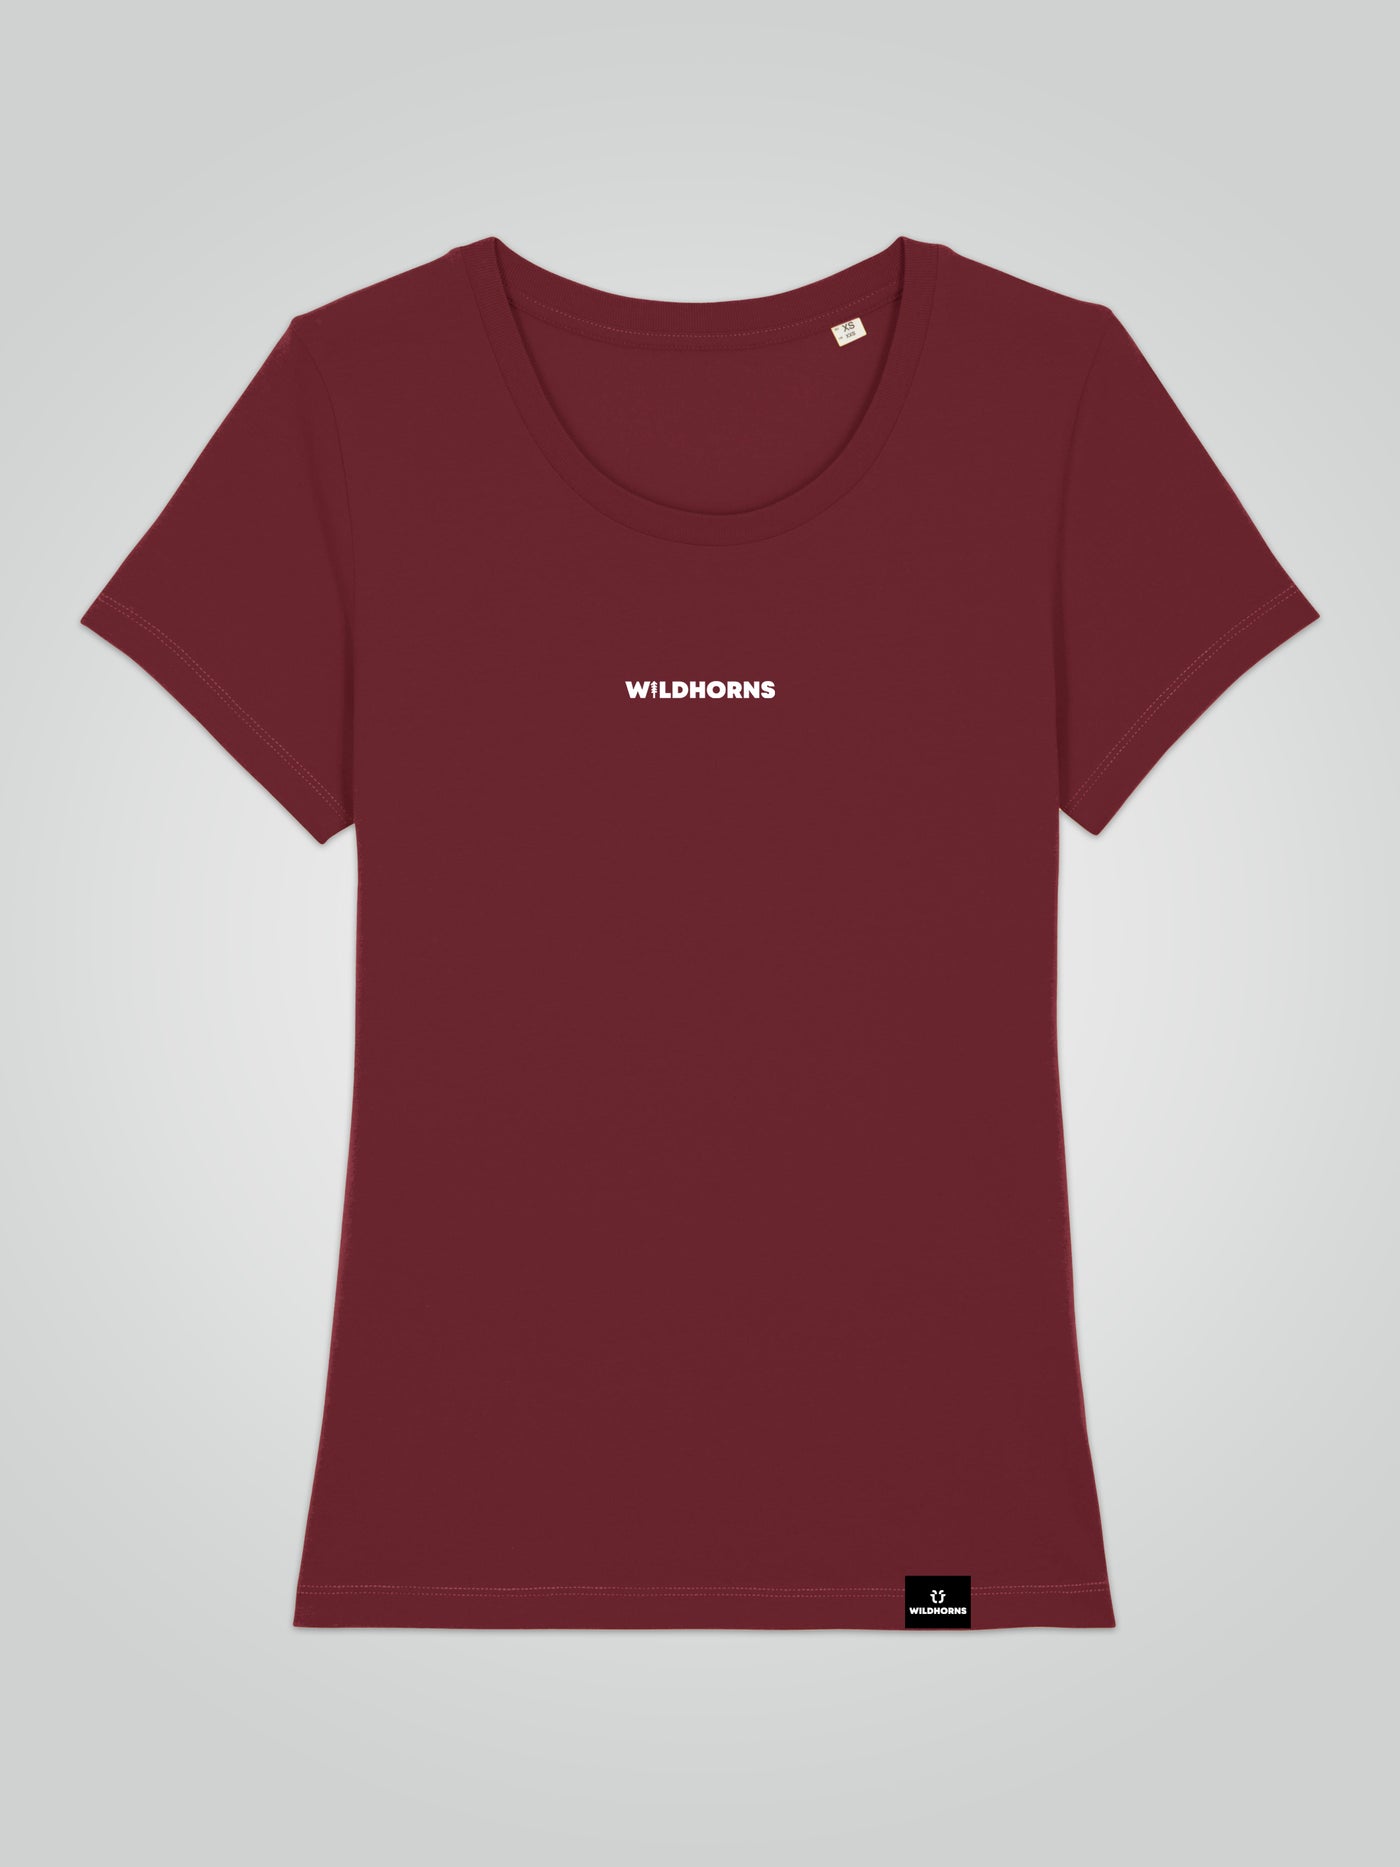 Wildhorns Tree - Women's Fitted T-Shirt